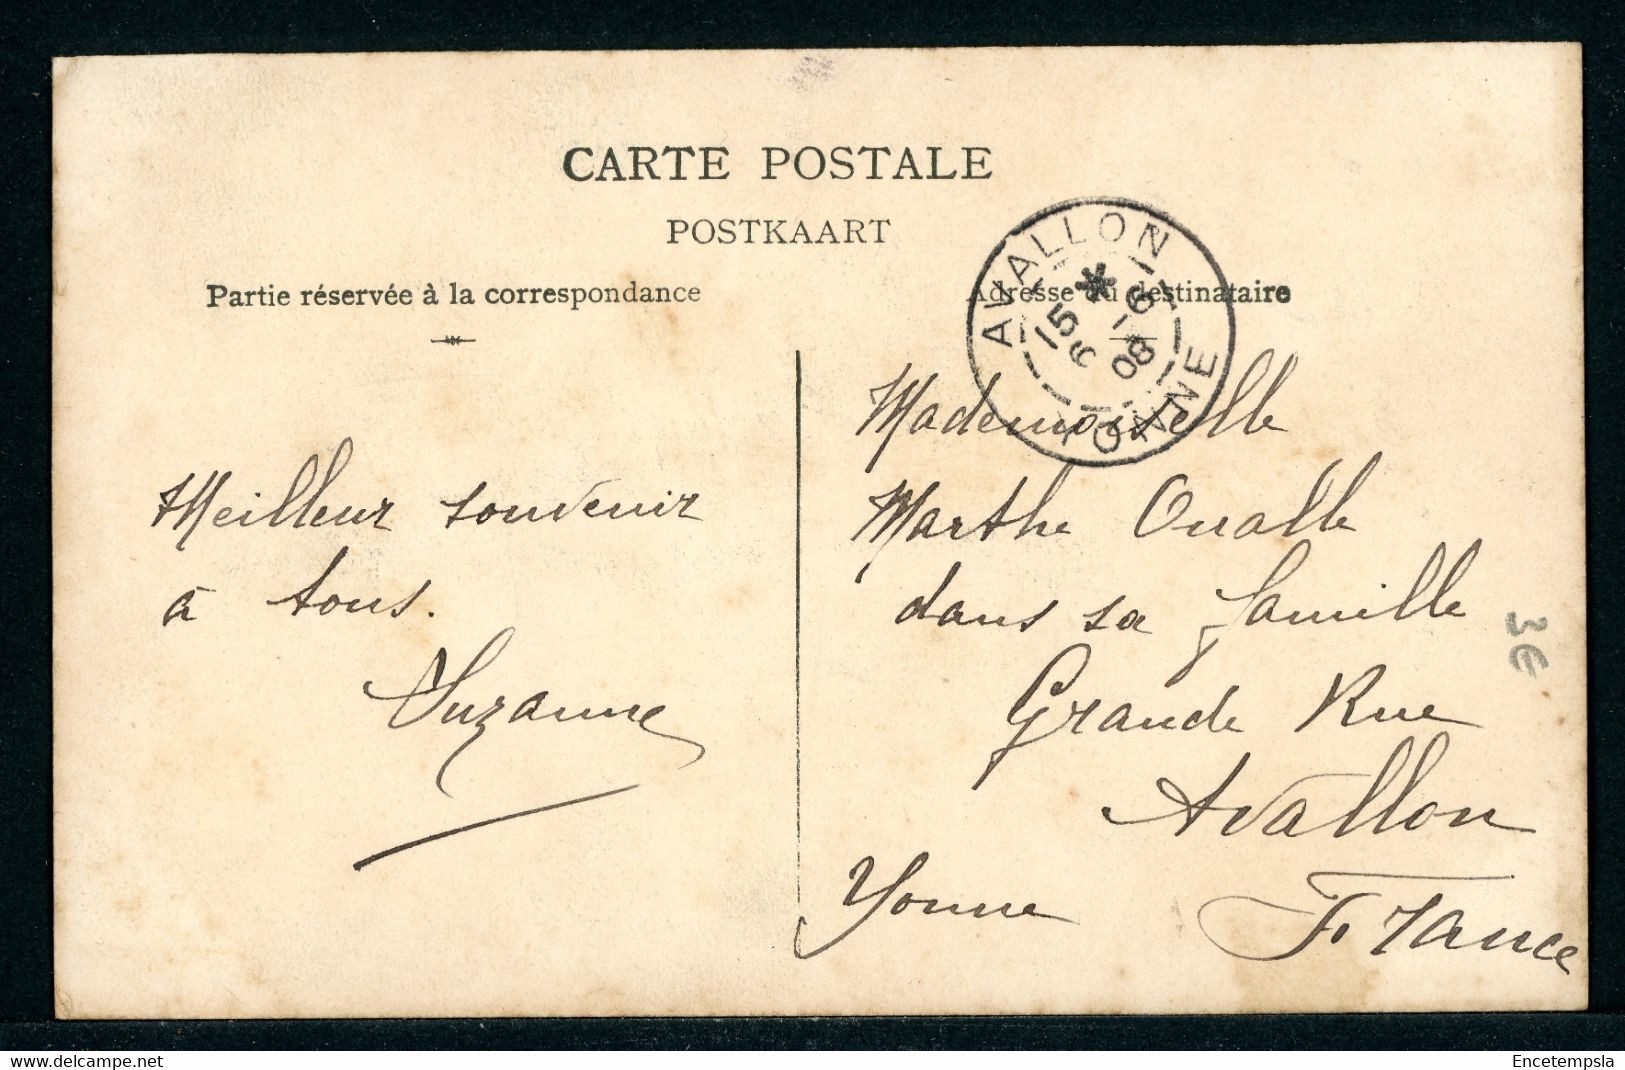 CPA - Carte Postale - Belgique - Tournai - Le Monument Français - 1908 (CP22256) - Tournai